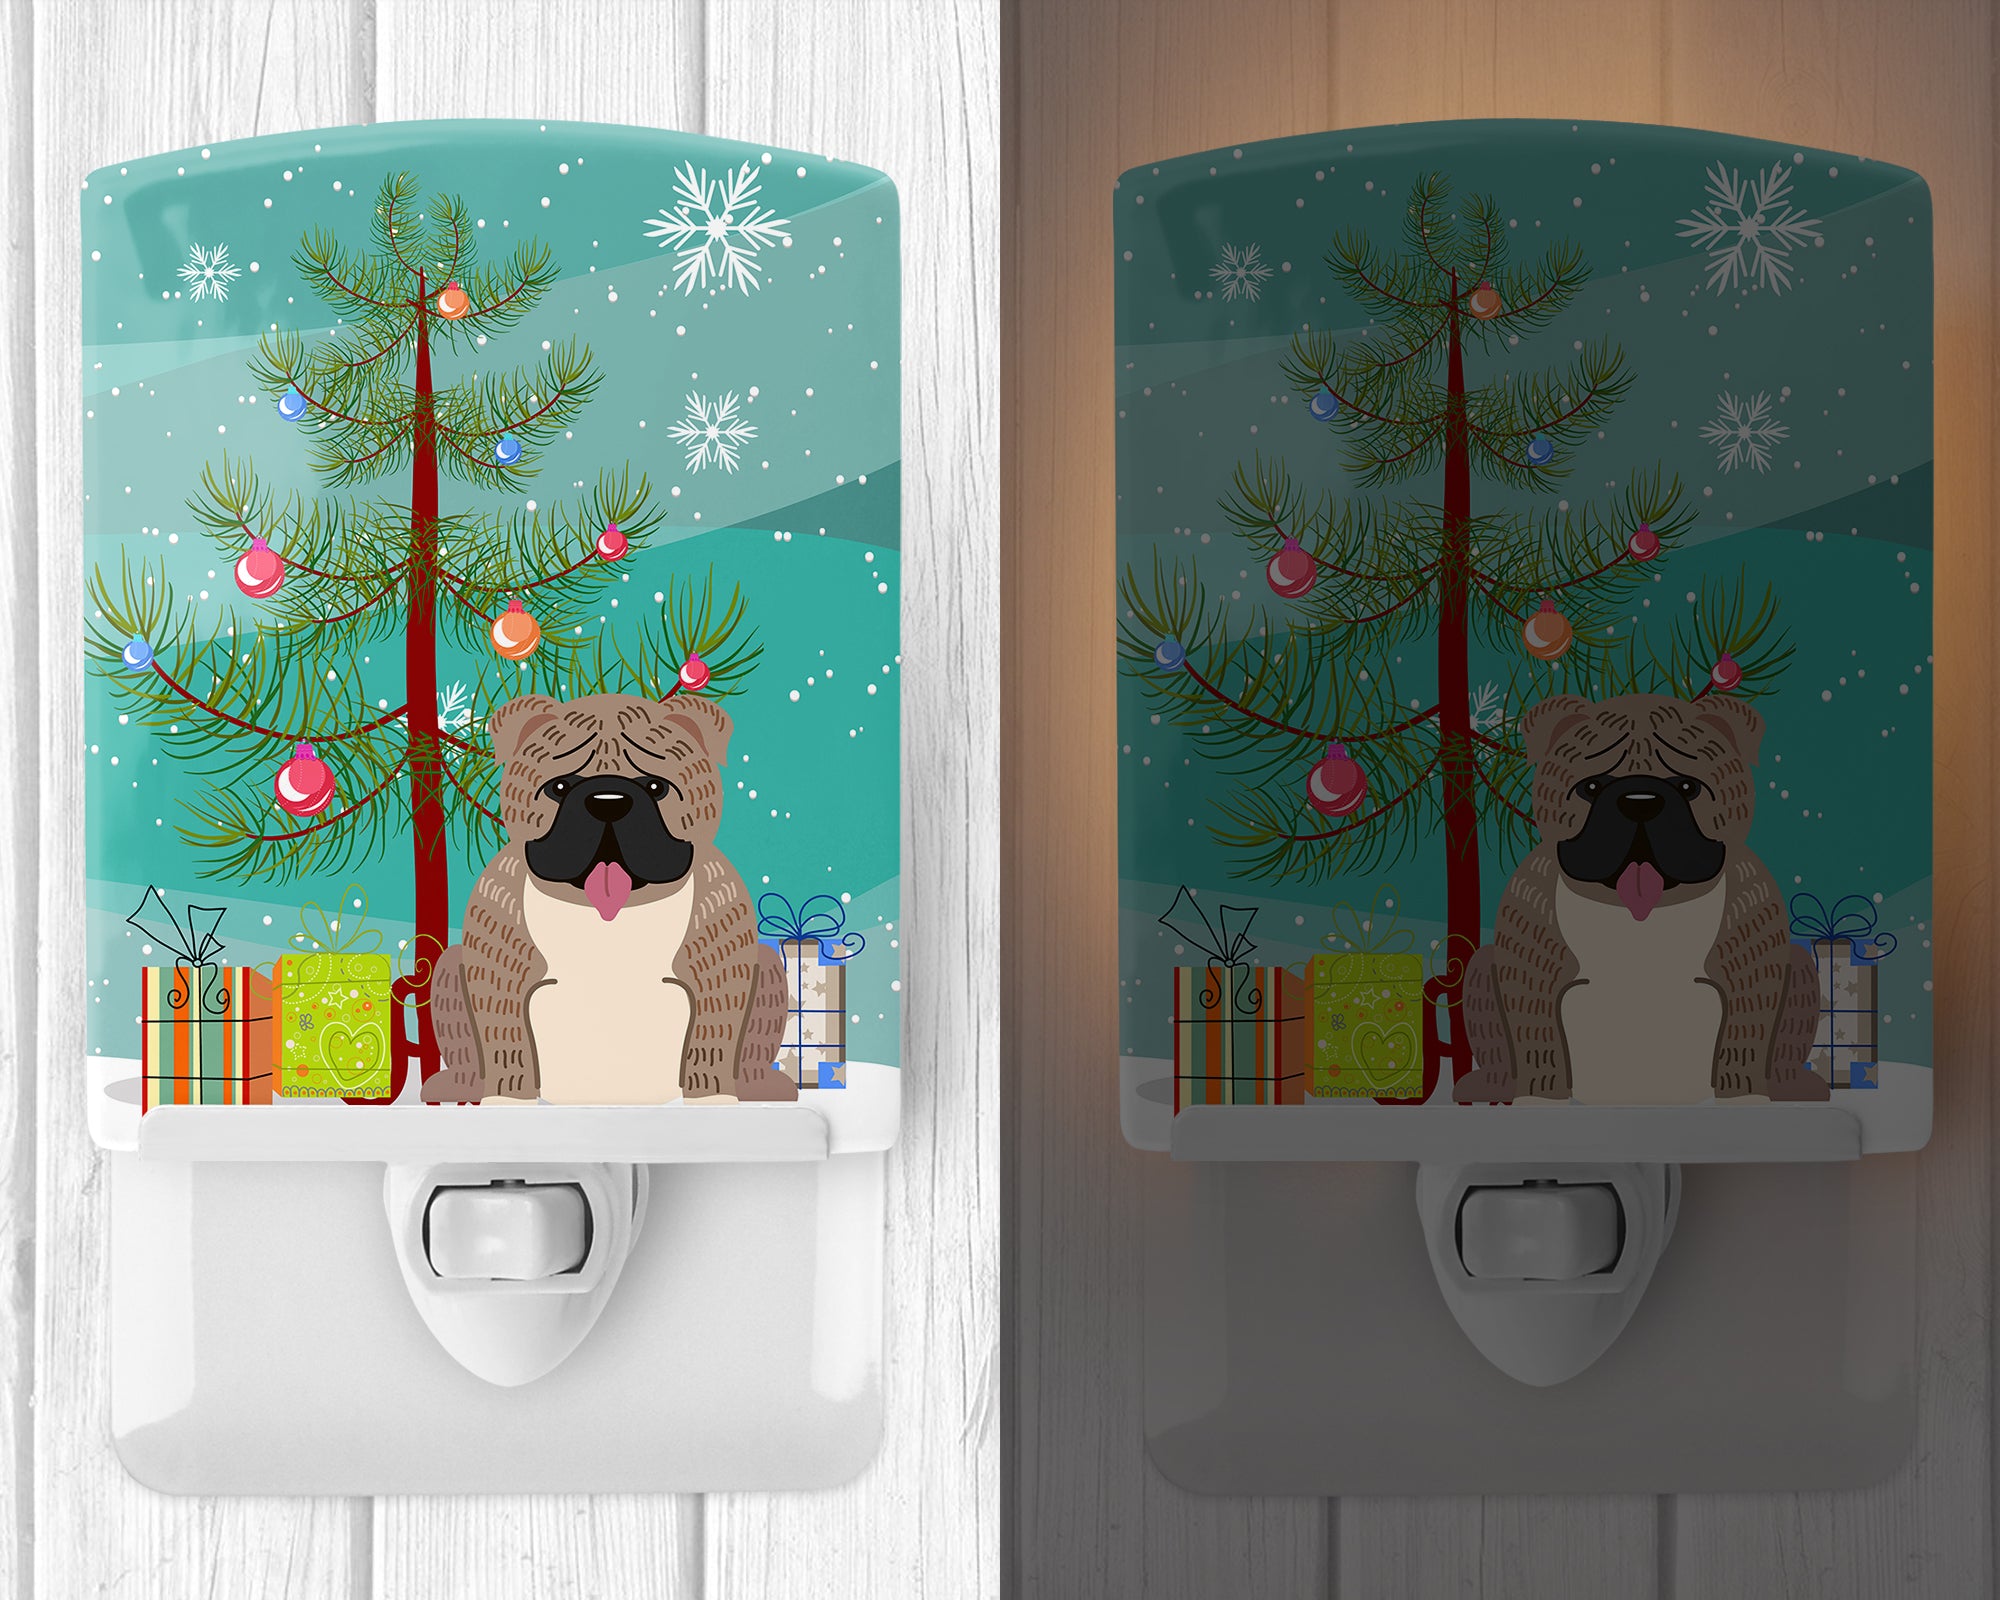 Merry Christmas Tree English Bulldog Grey Brindle  Ceramic Night Light BB4251CNL - the-store.com